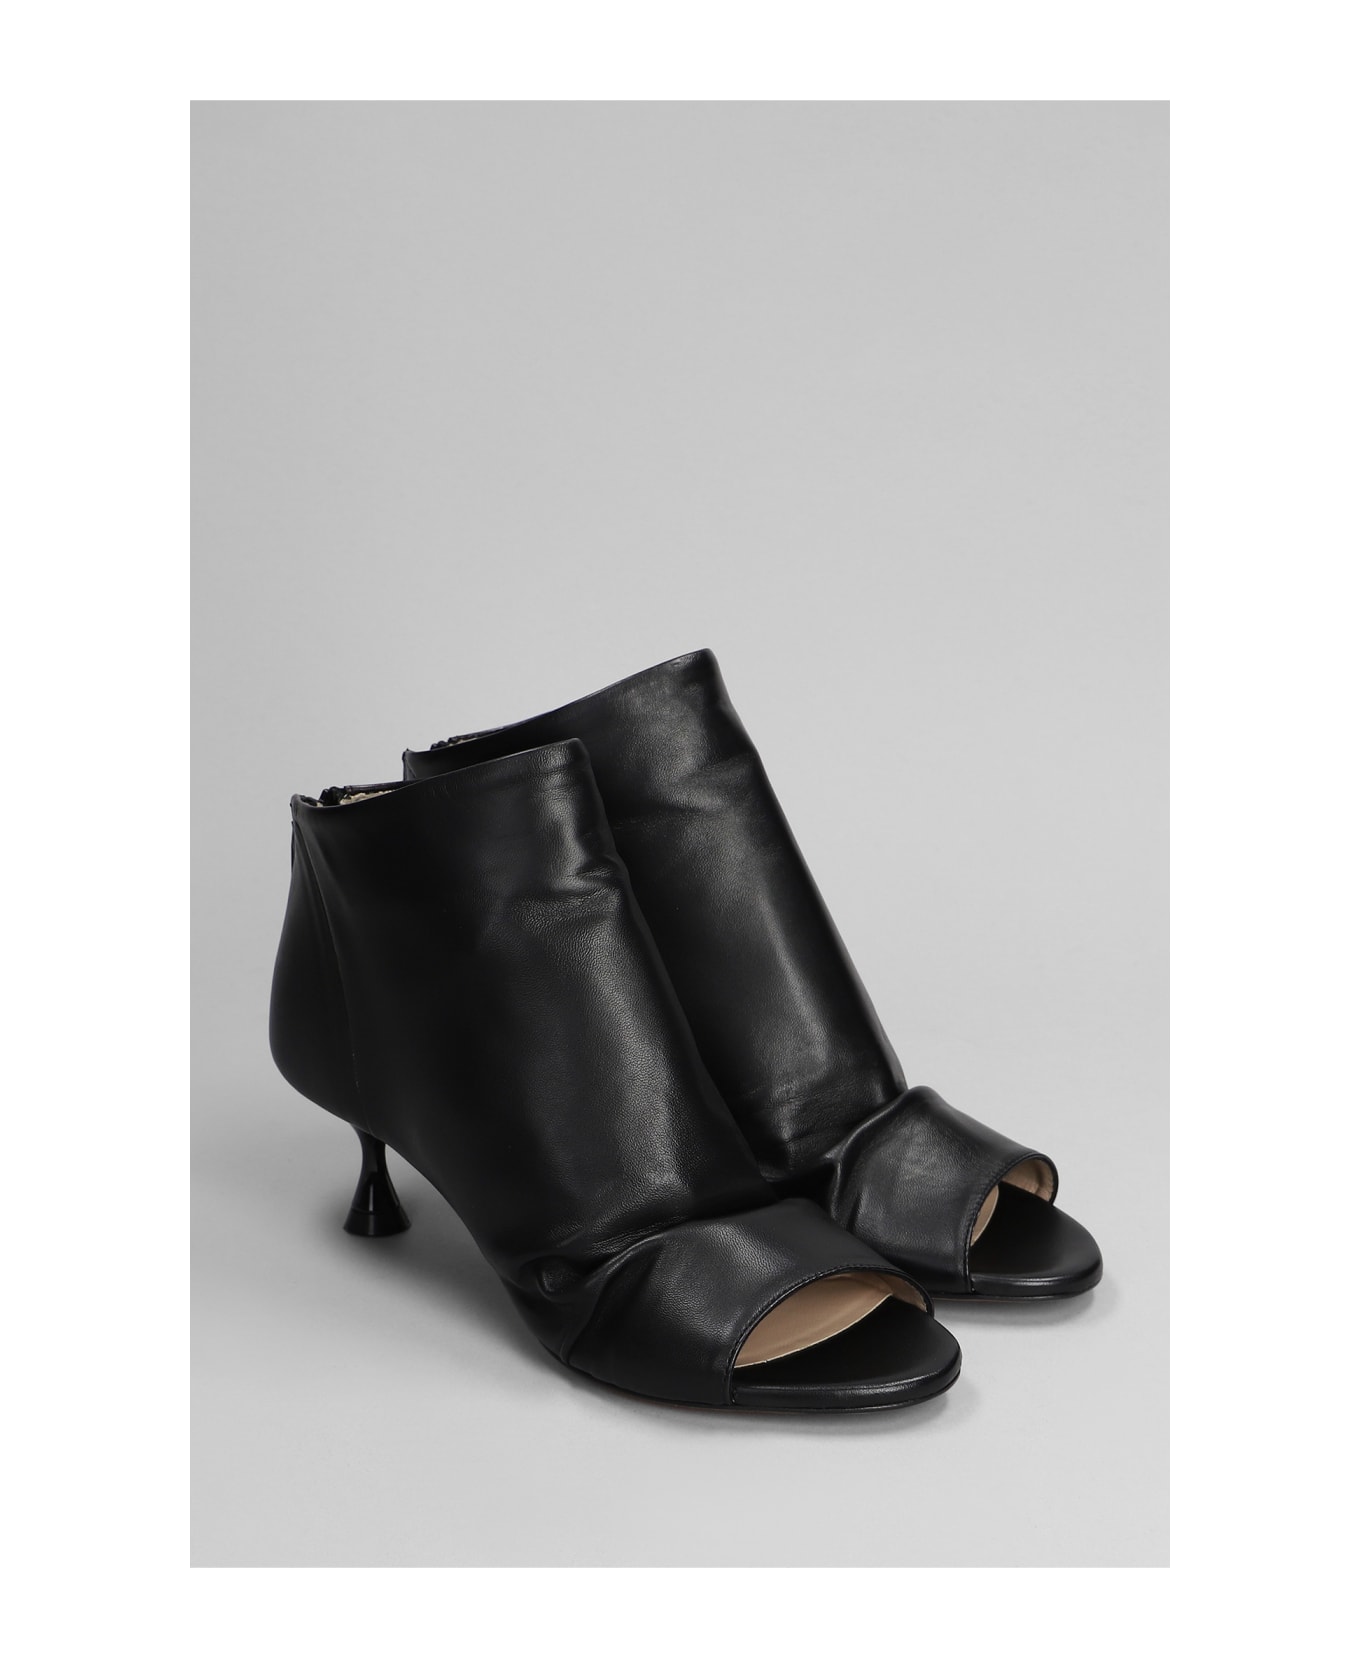 Marc Ellis High Heels Ankle Boots In Black Leather - black